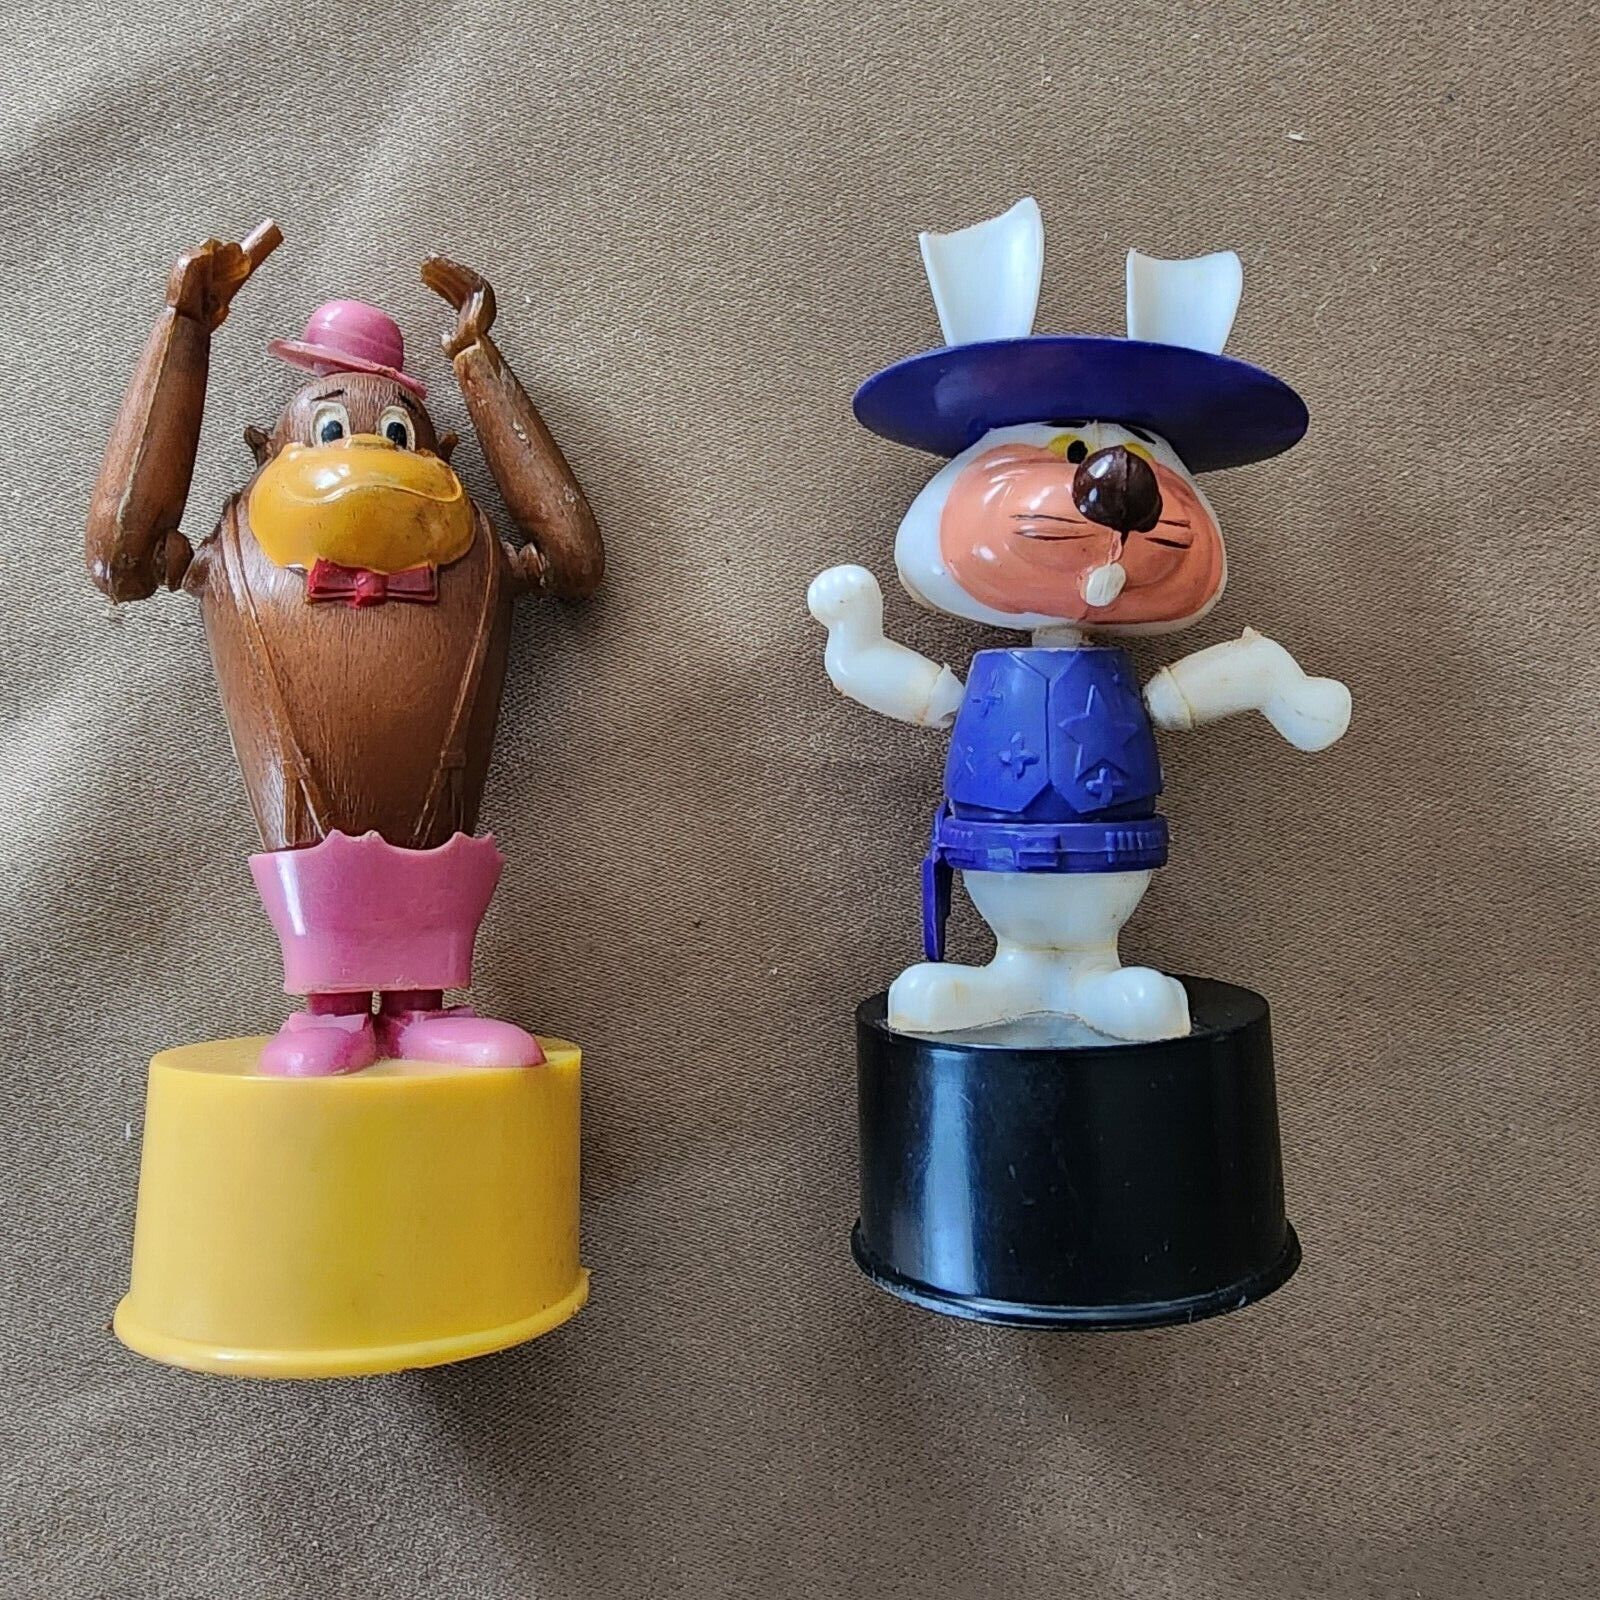 Magilla Gorilla and Ricochet Rabbit - Push Button Puppets - Kohner Bros.Set of 2